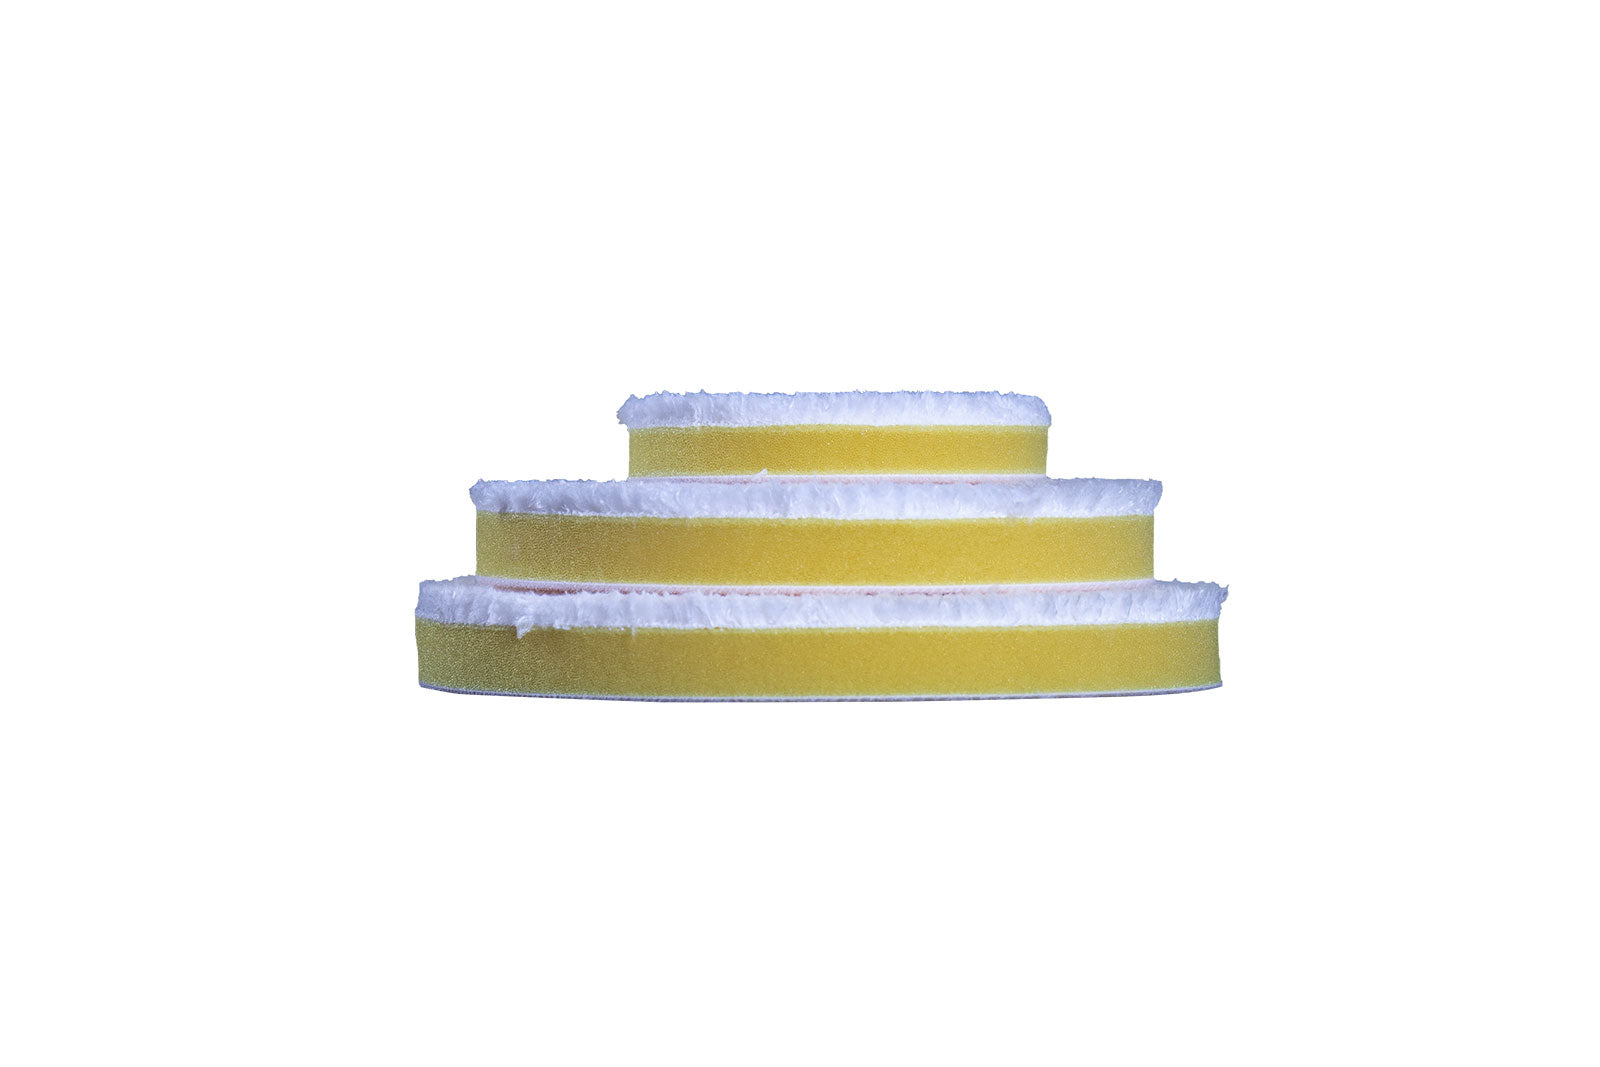 RUPES 6" D-A Fine Microfiber Pad(Yellow) 9.MF160M (160MM)